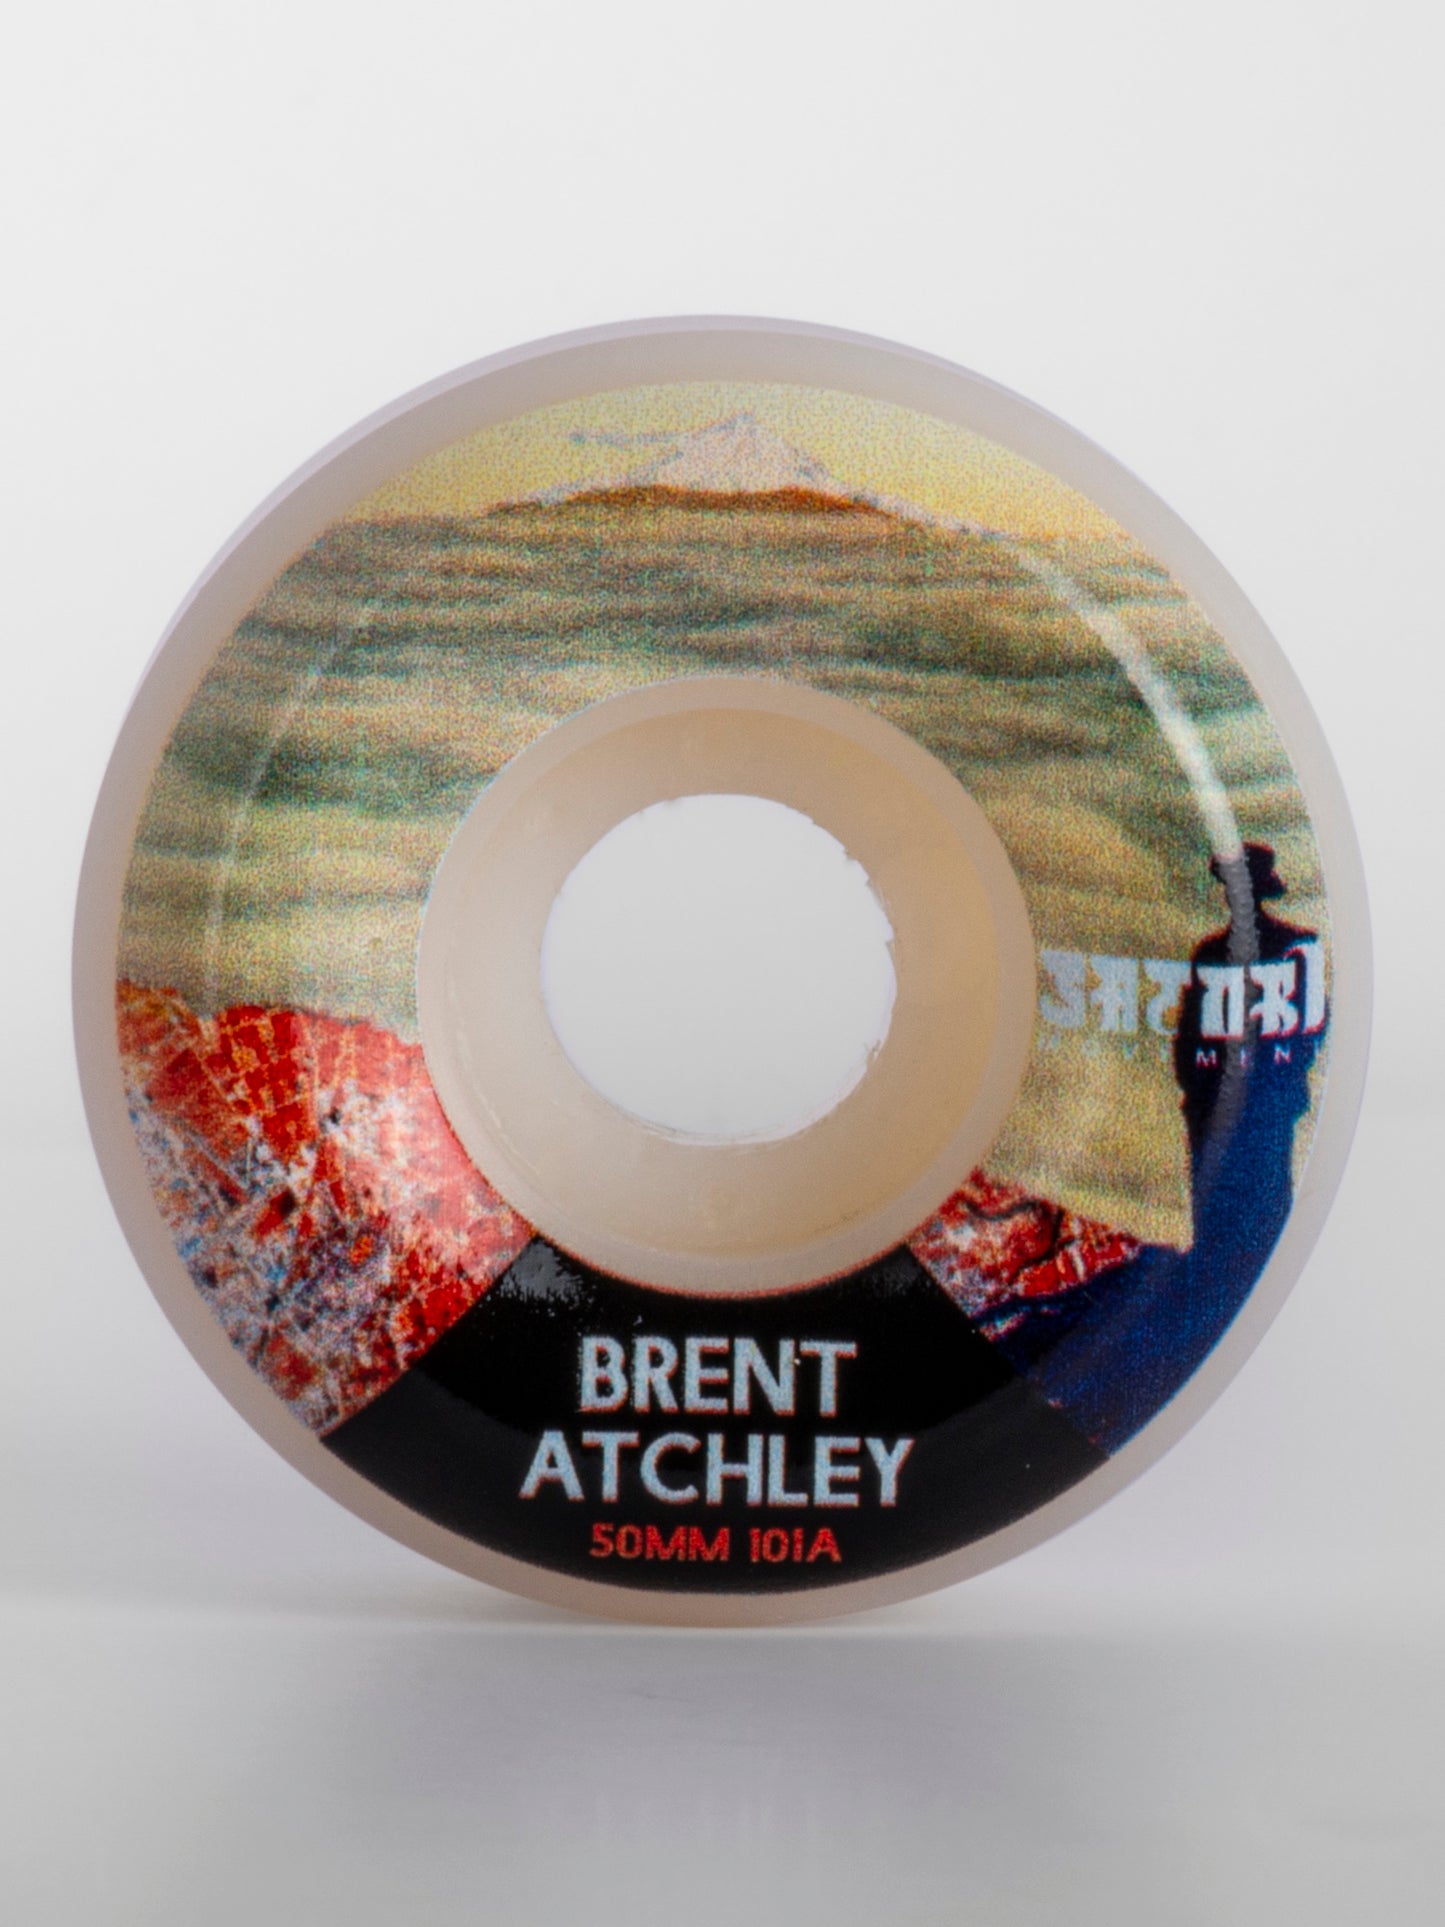 SATORI Artist Series Wheels - Brent Atchley 50mm/101a